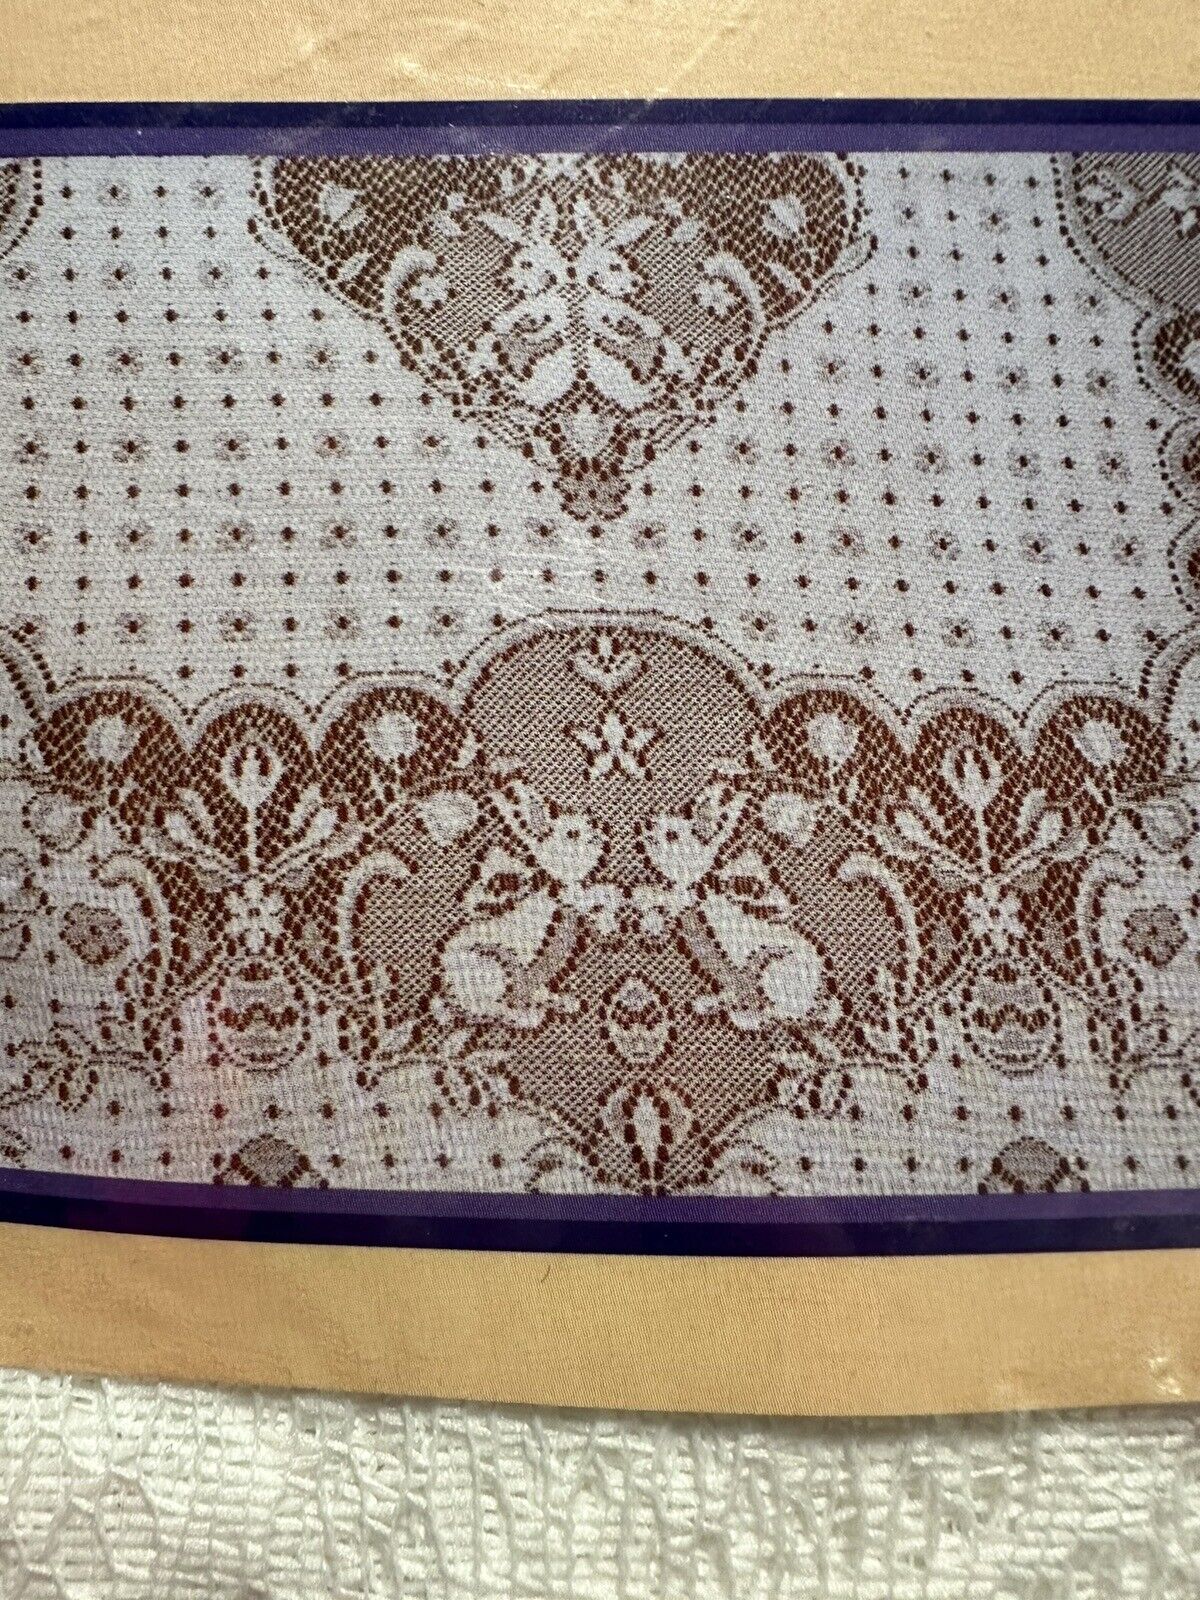 NEW Woven Scranton Lace Tablecloth Springtime 60x84 Oblong White